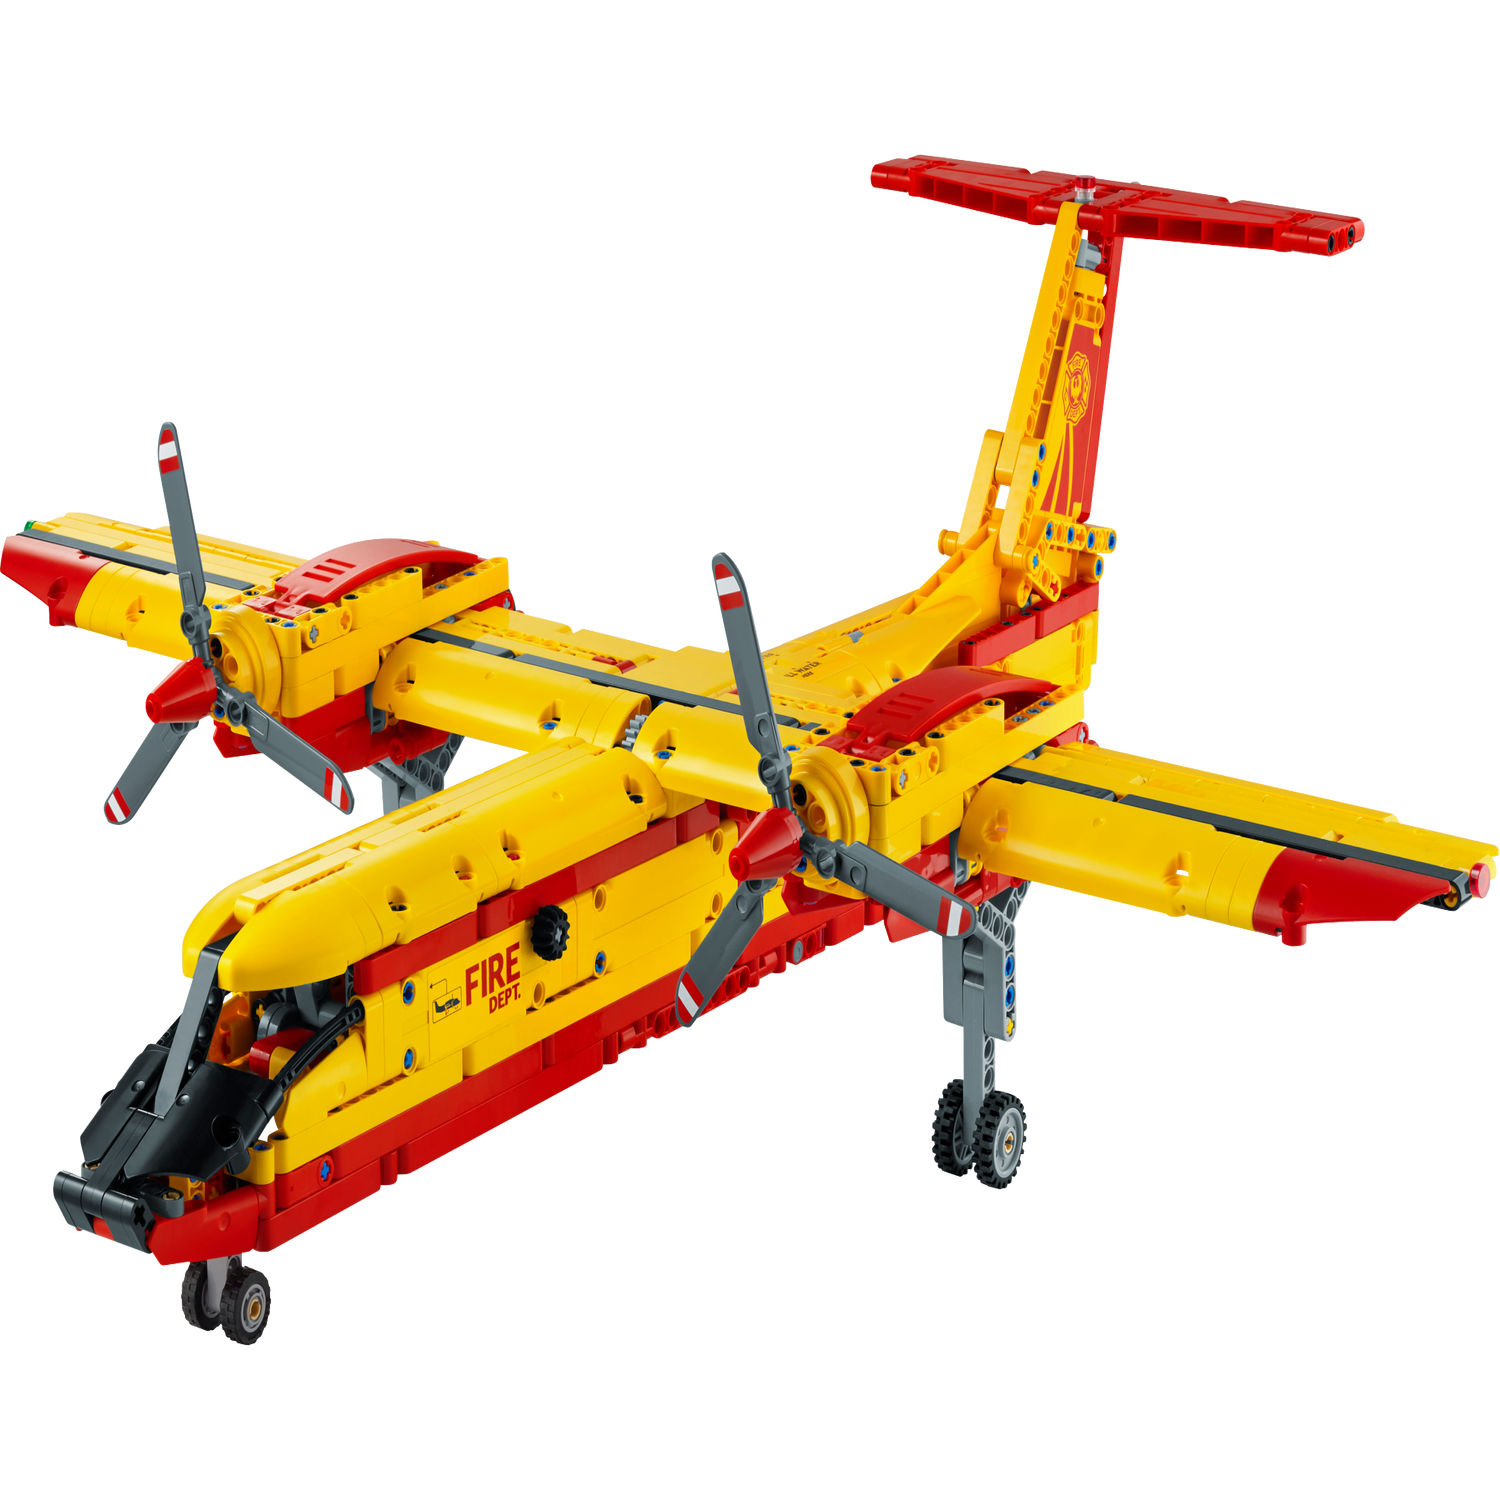  Lego 4 Basic Bricks - 650 pcs : Toys & Games